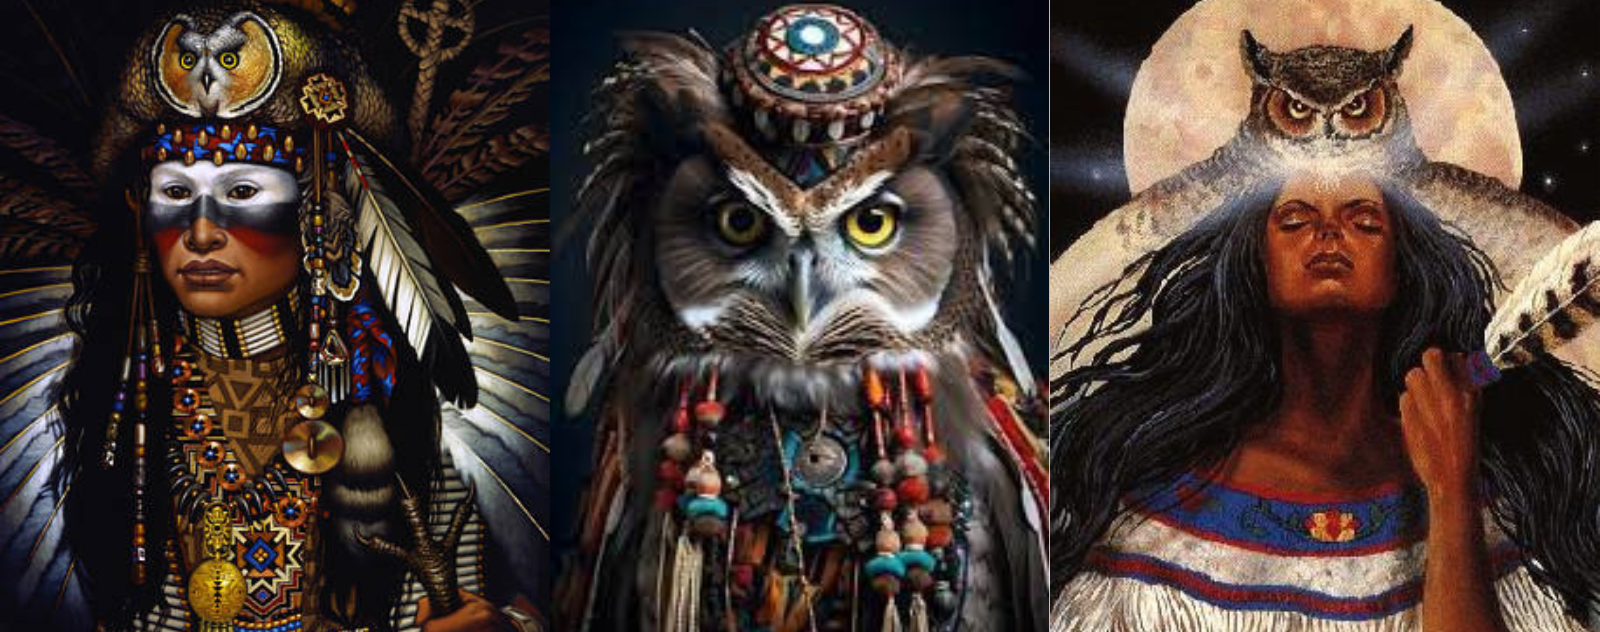 Native American Owl Symbolism